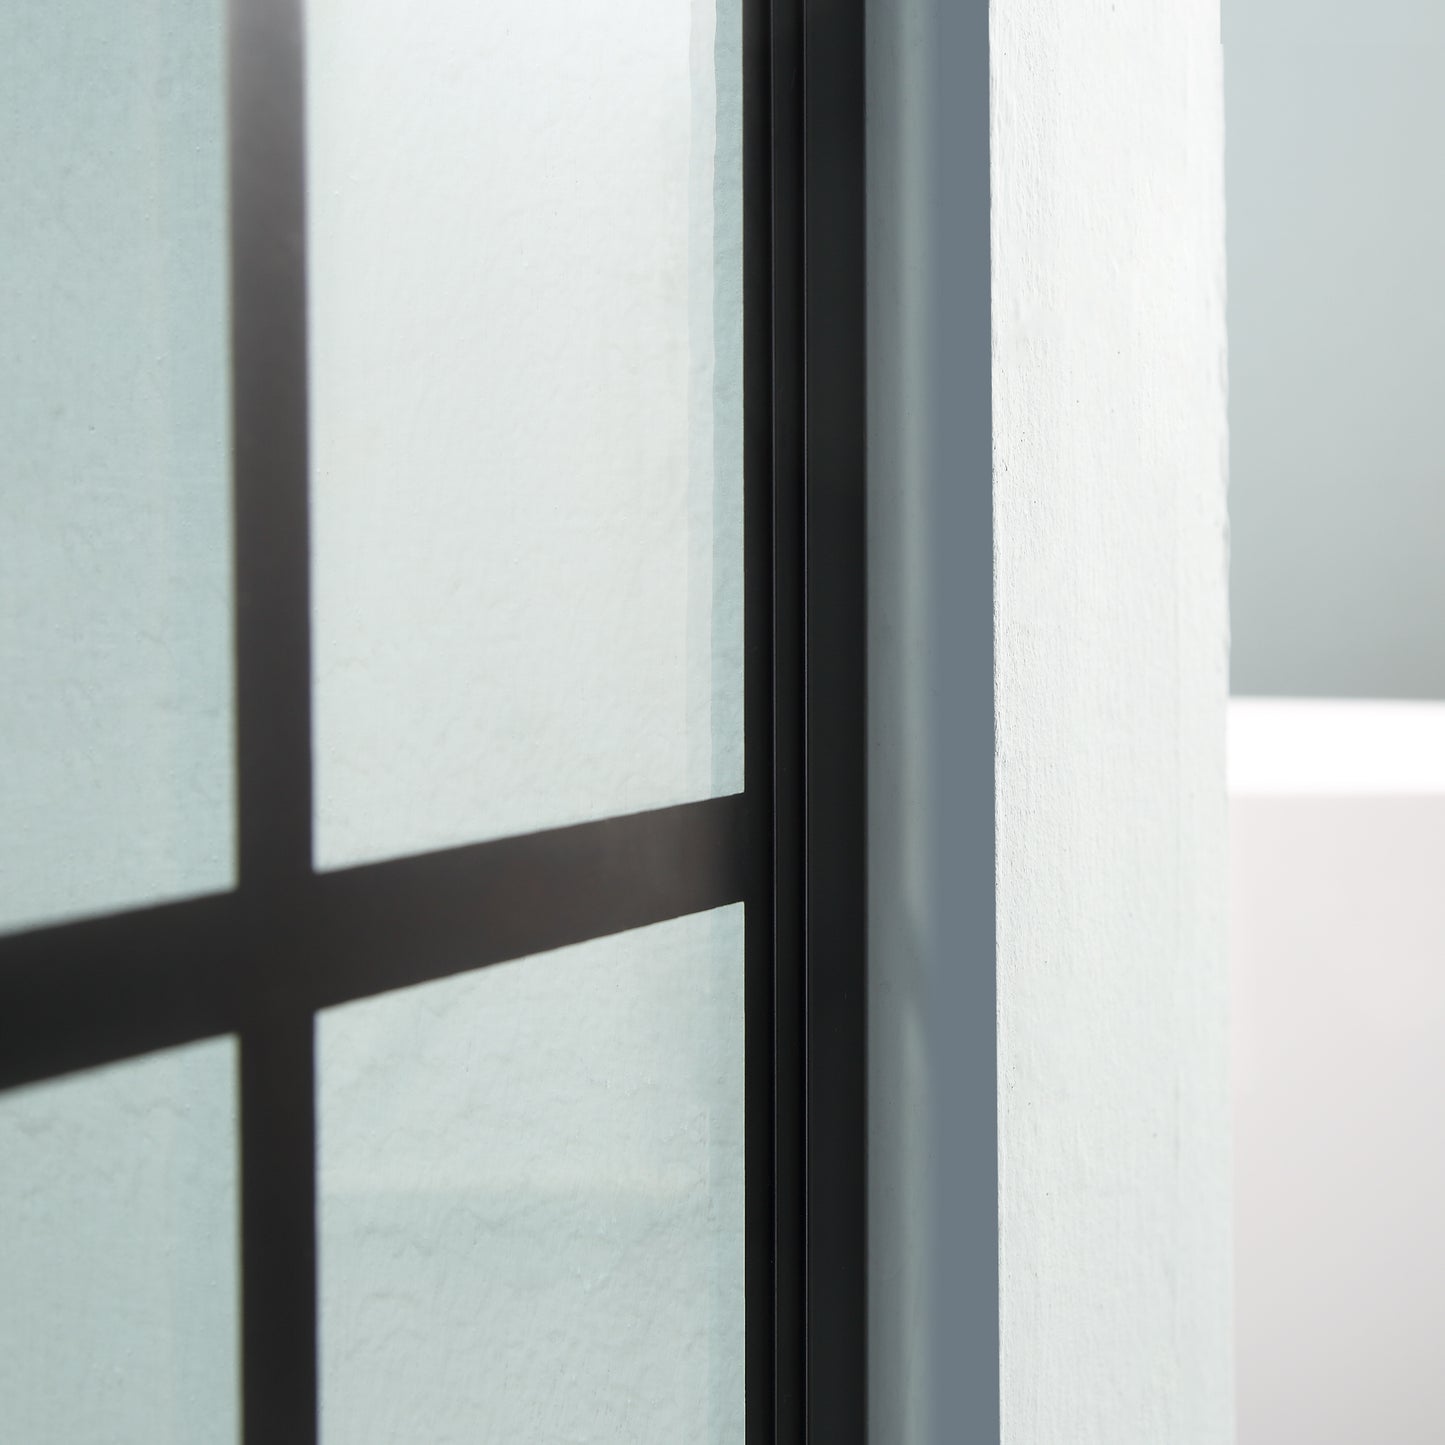 Shower Door 34" W x 72" H Single Panel Frameless Fixed Shower Door, Open Entry Design in Matte Black